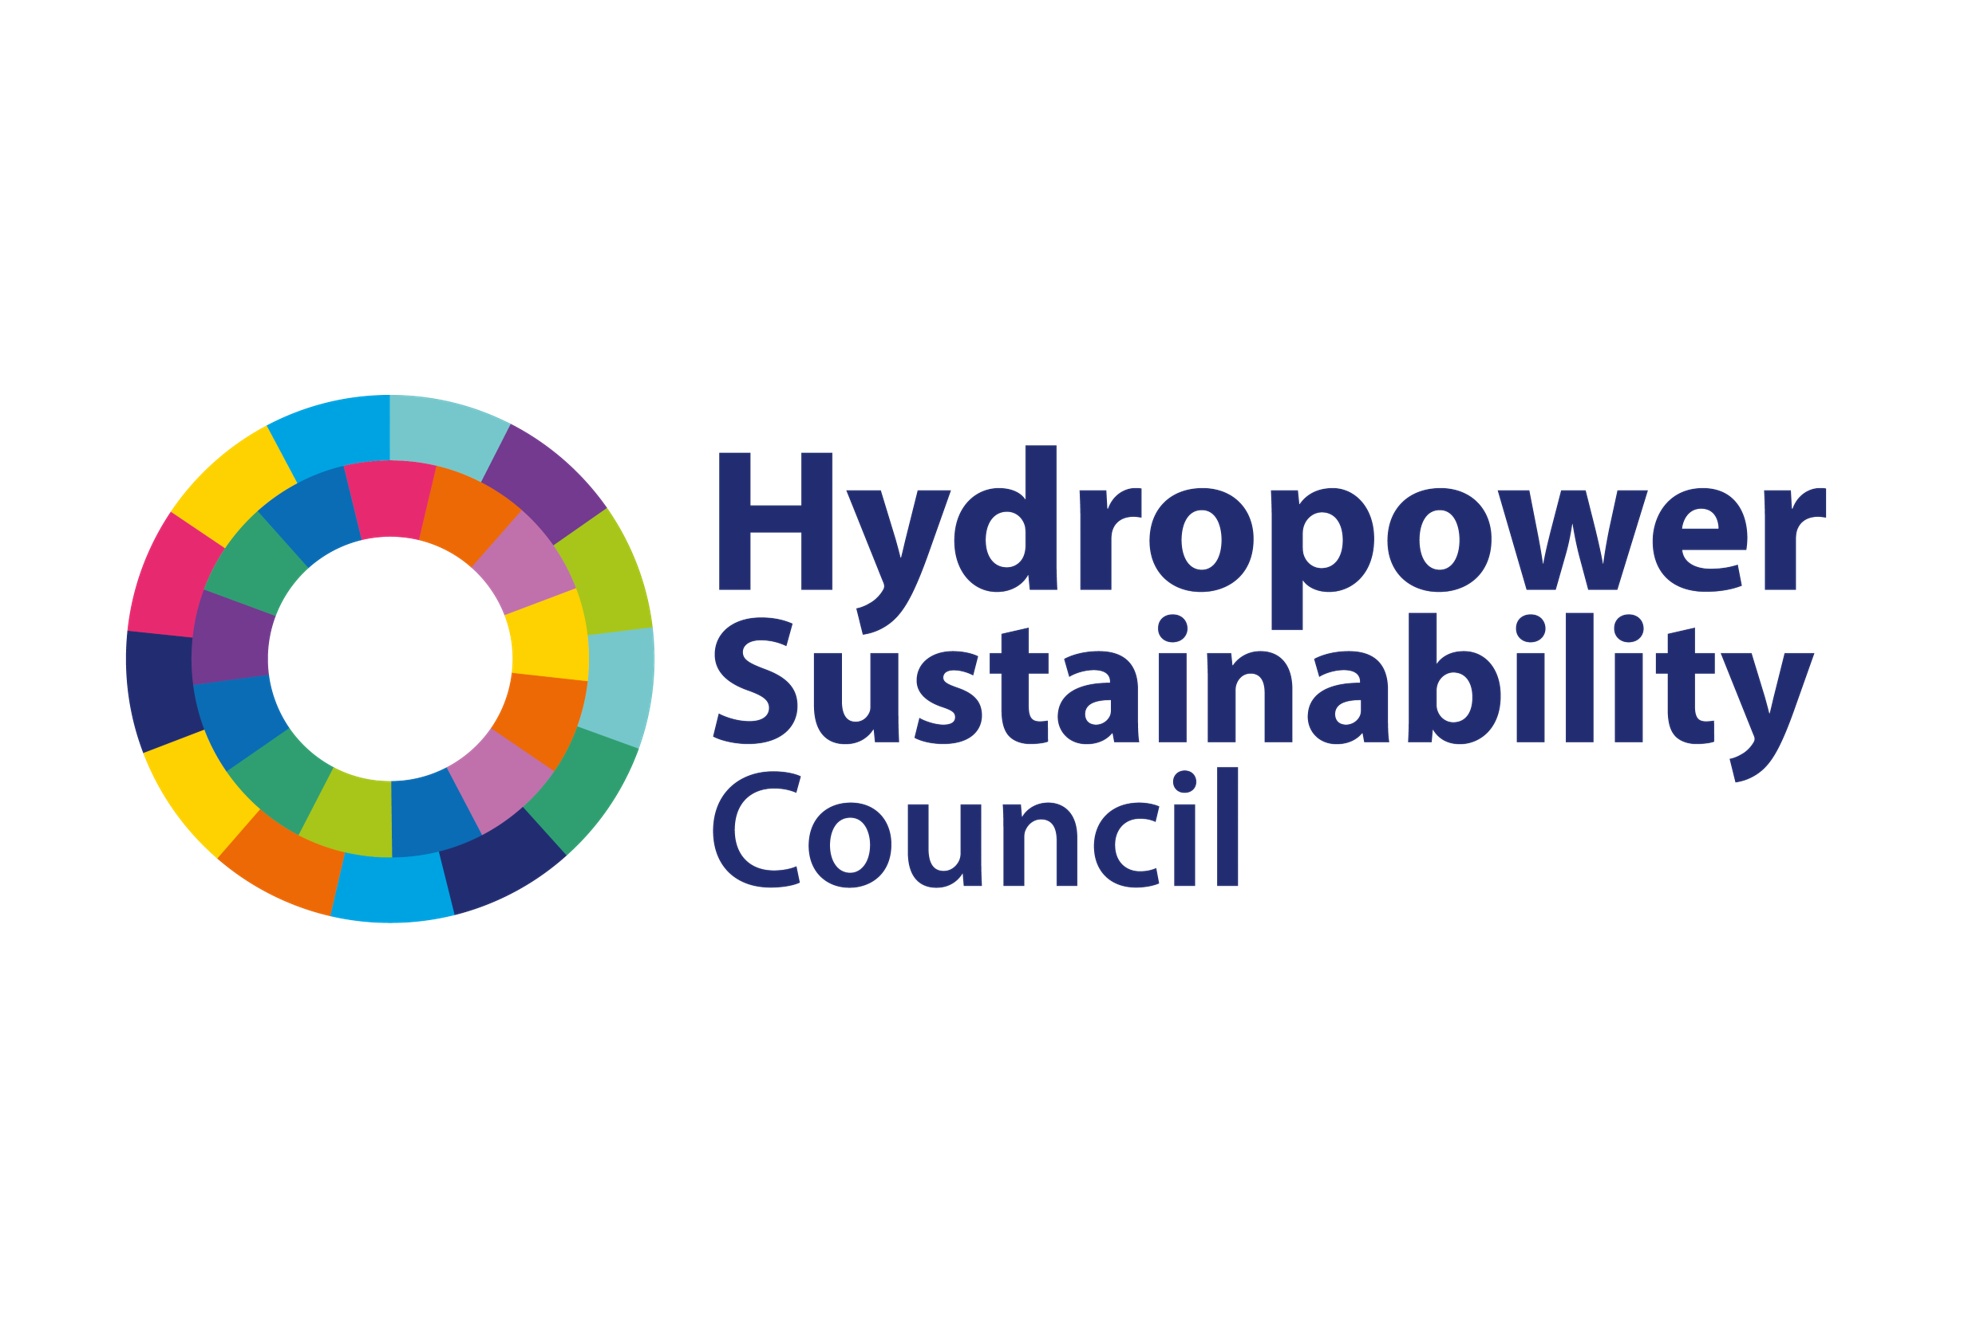 Hydropower Sustainability Council logo